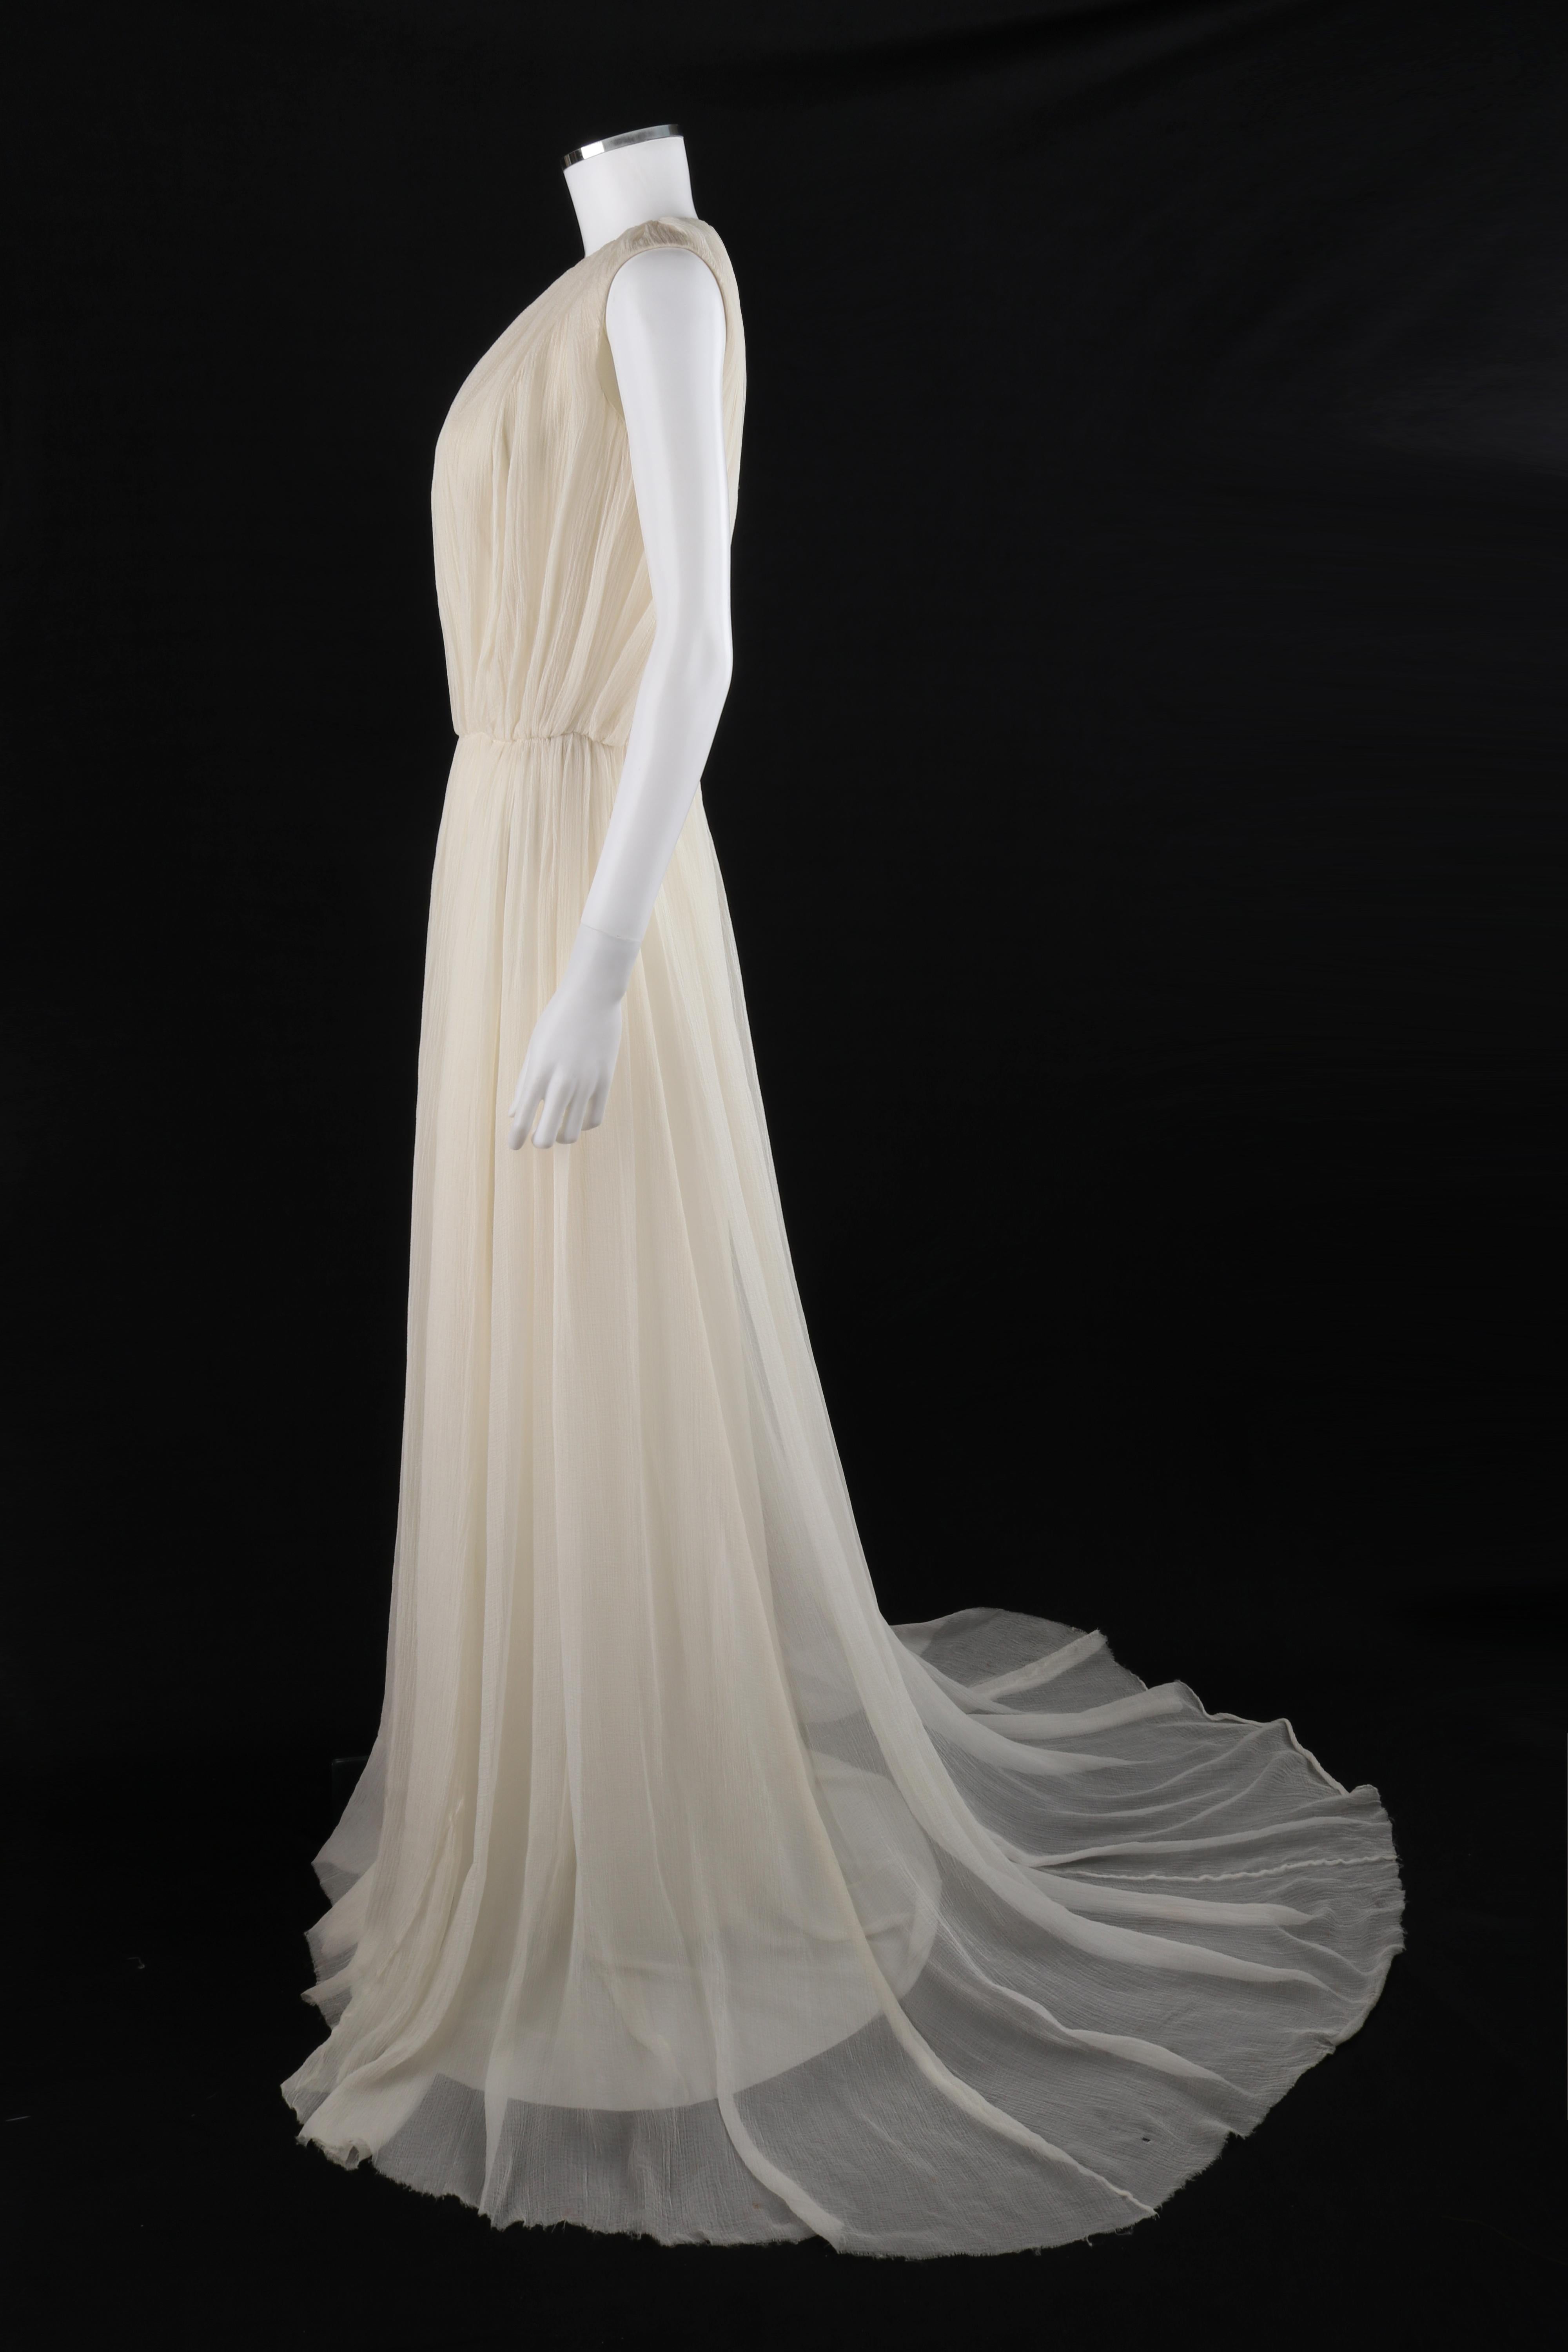 Beige ALEXANDER McQUEEN S/S 2007 Ivory Silk Chiffon Full Length Ballgown Dress Gown For Sale